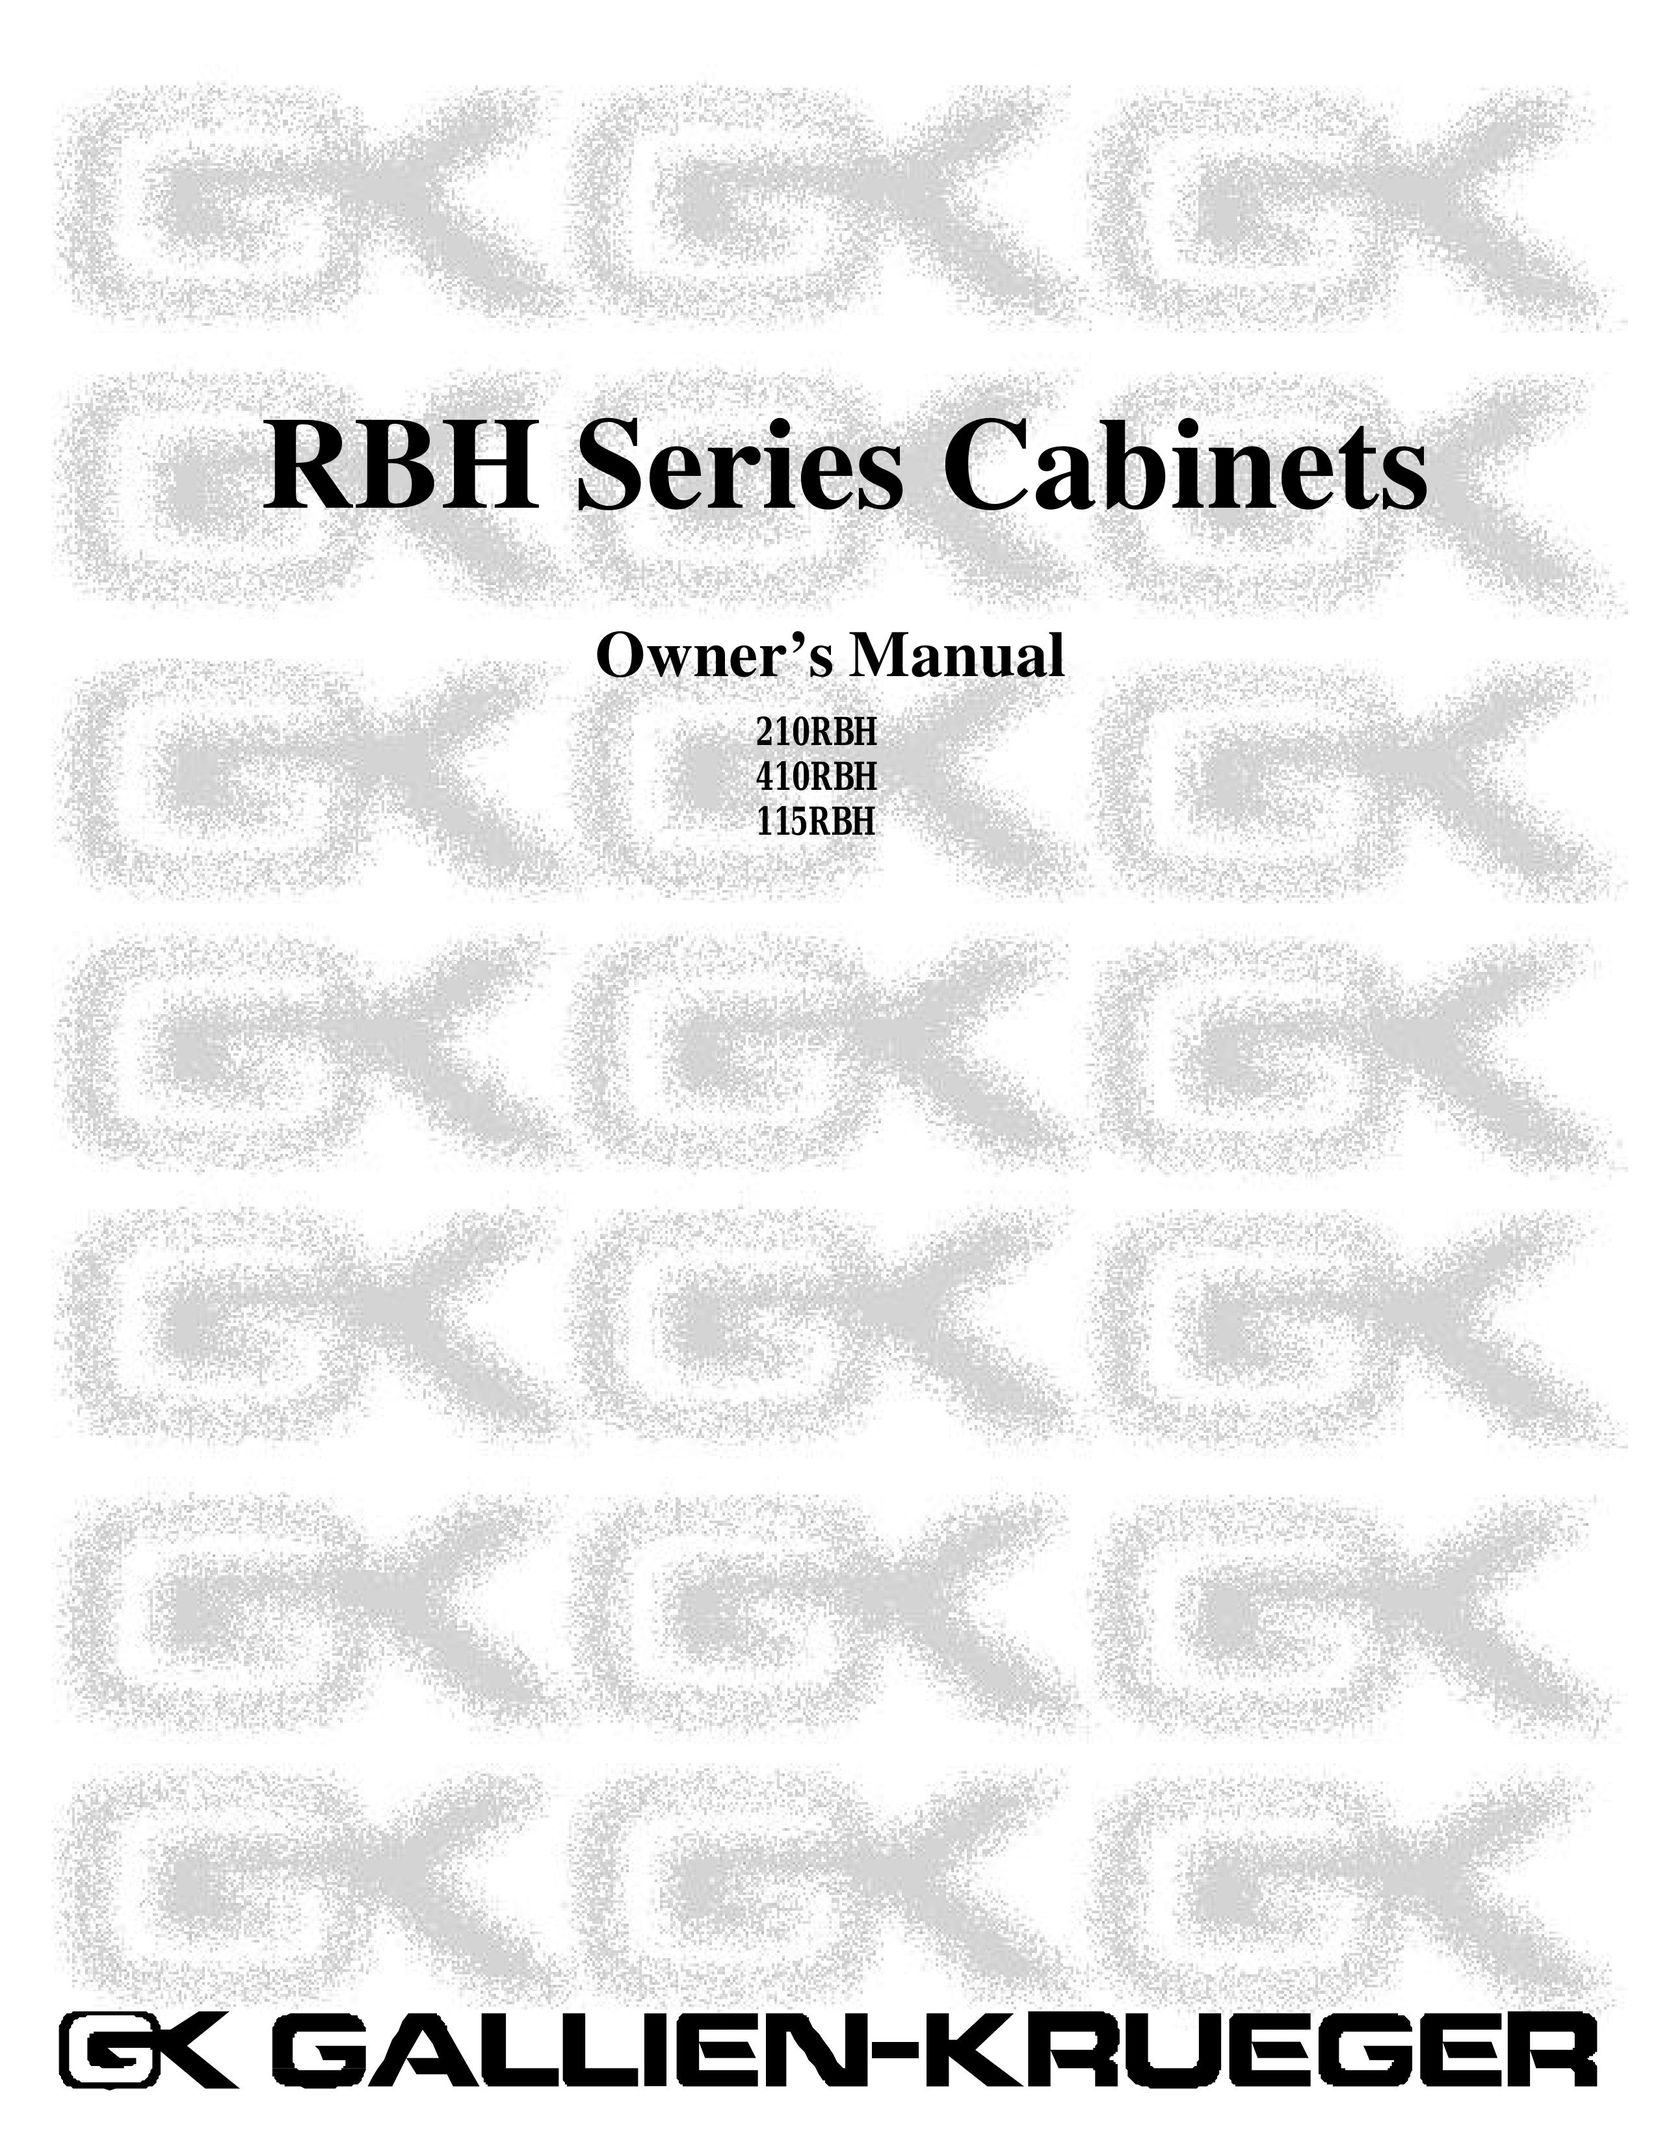 RBH Sound 210RBH Speaker User Manual